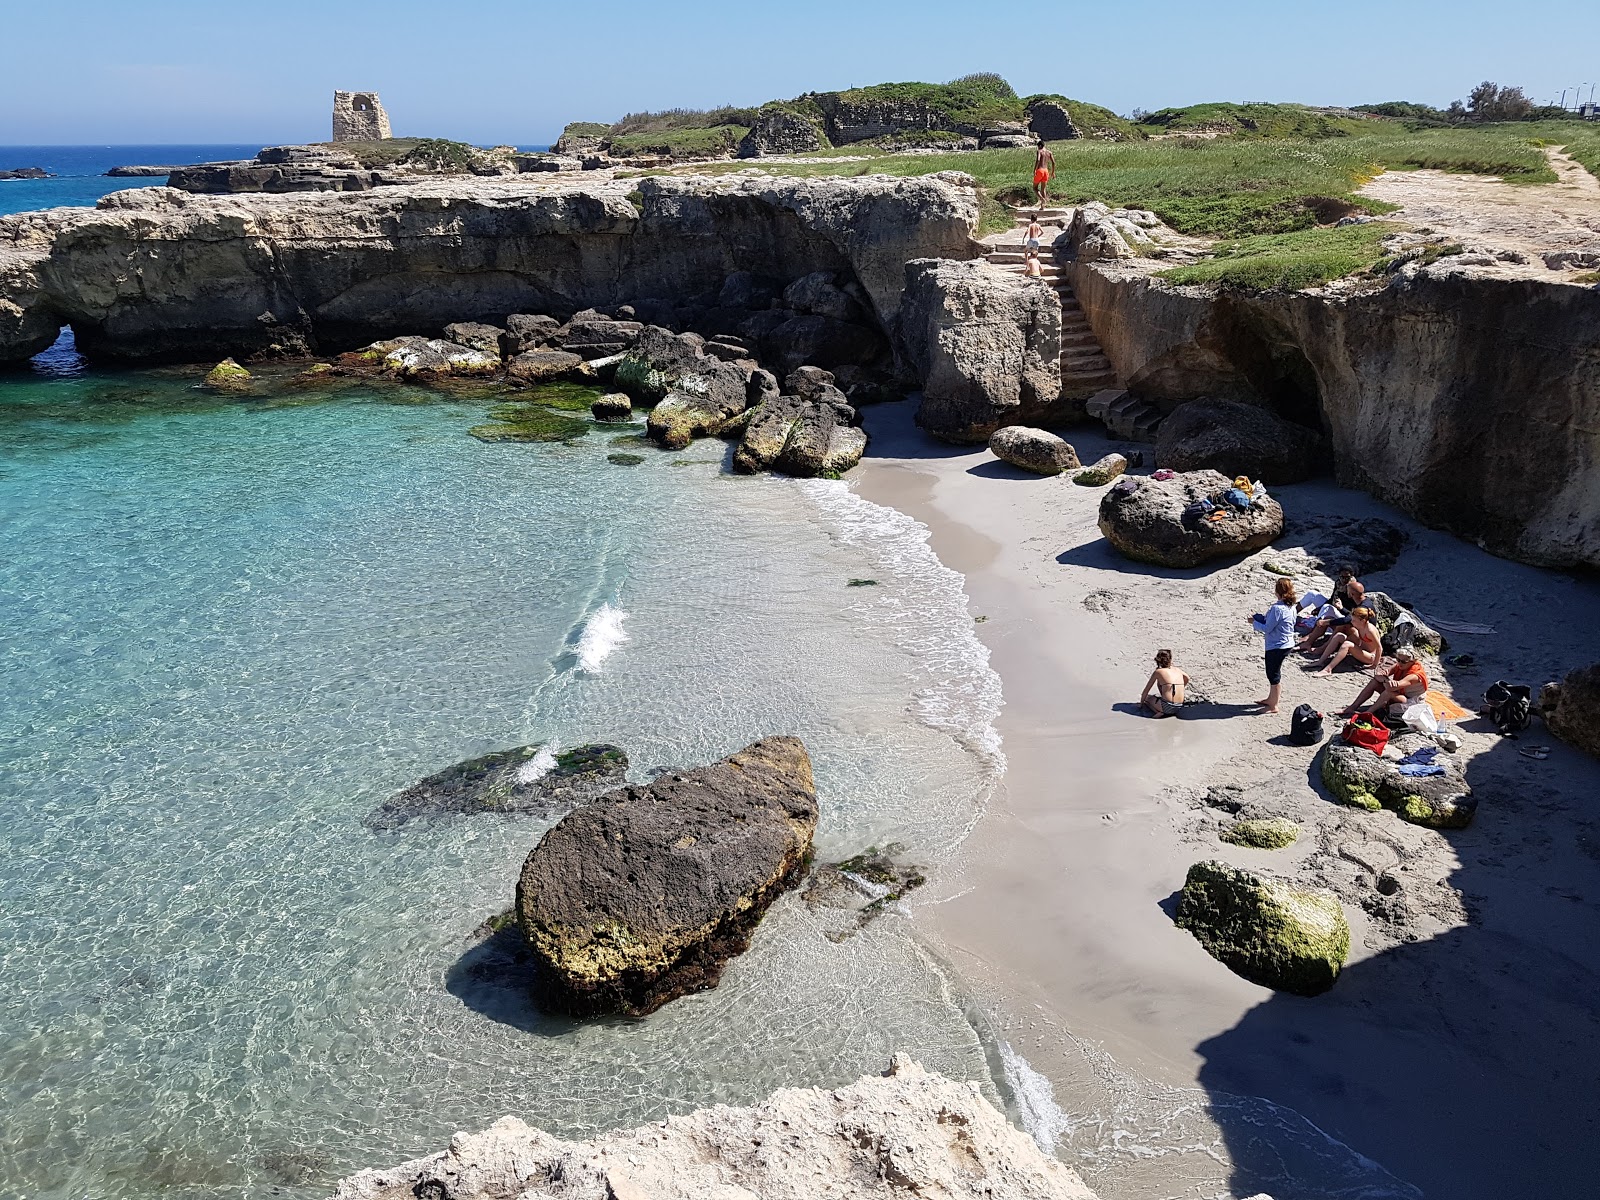 Photo of Spiaggia di Portulignu with blue pure water surface